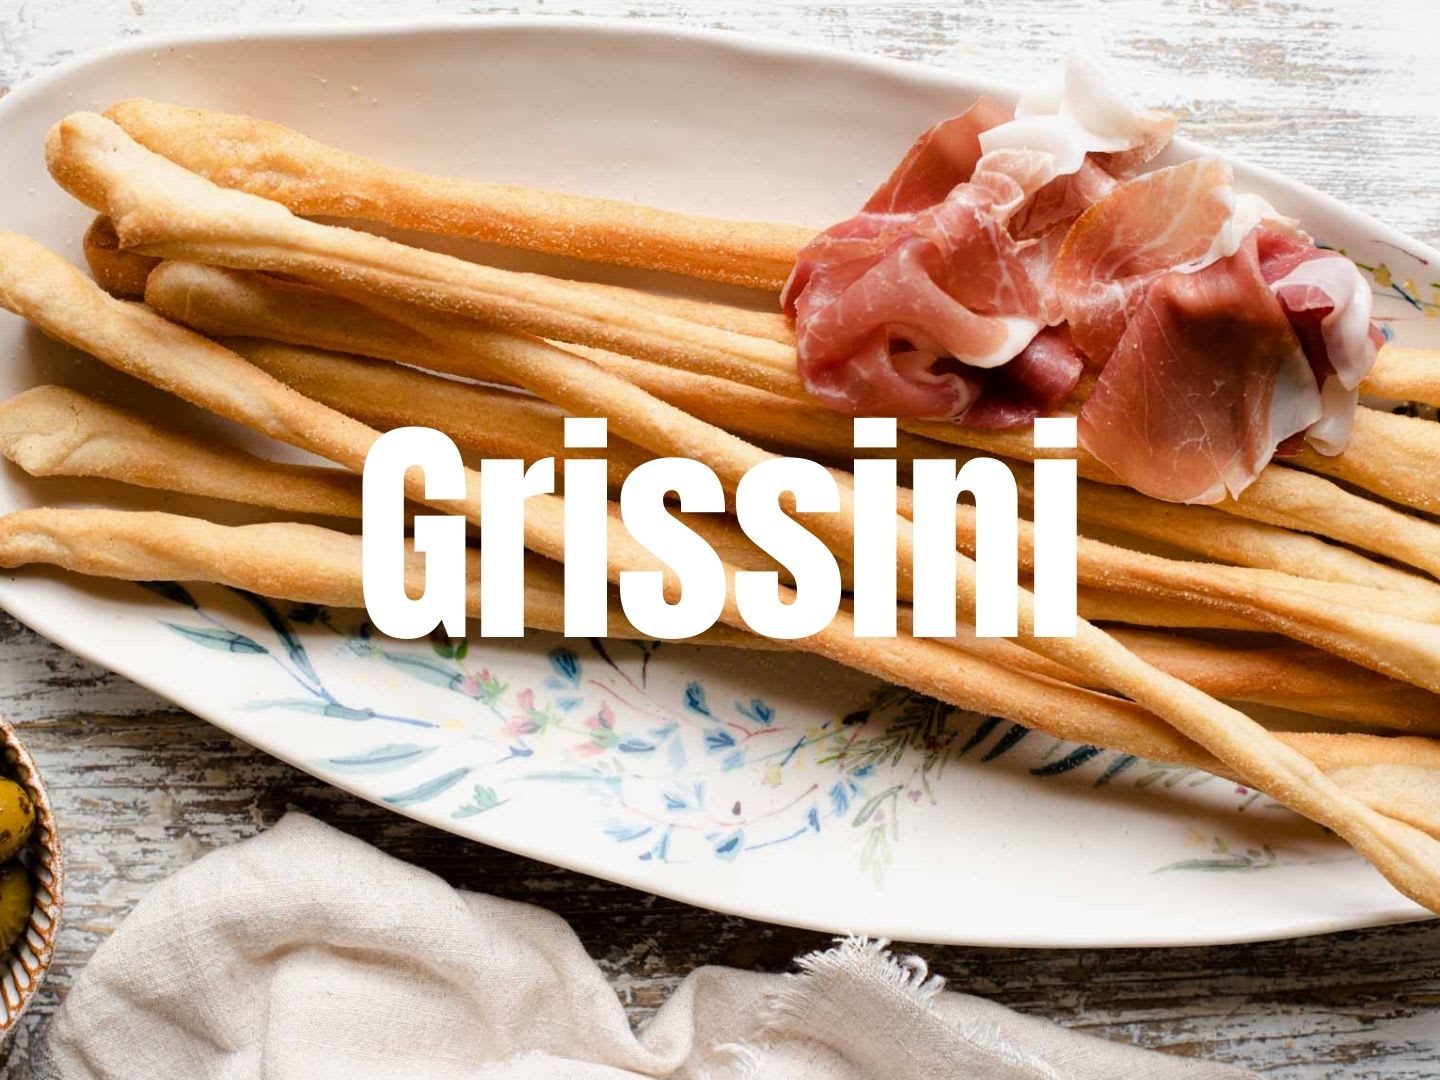 Grissini - Italian Breadsticks - Inside The Kitchen Rustic